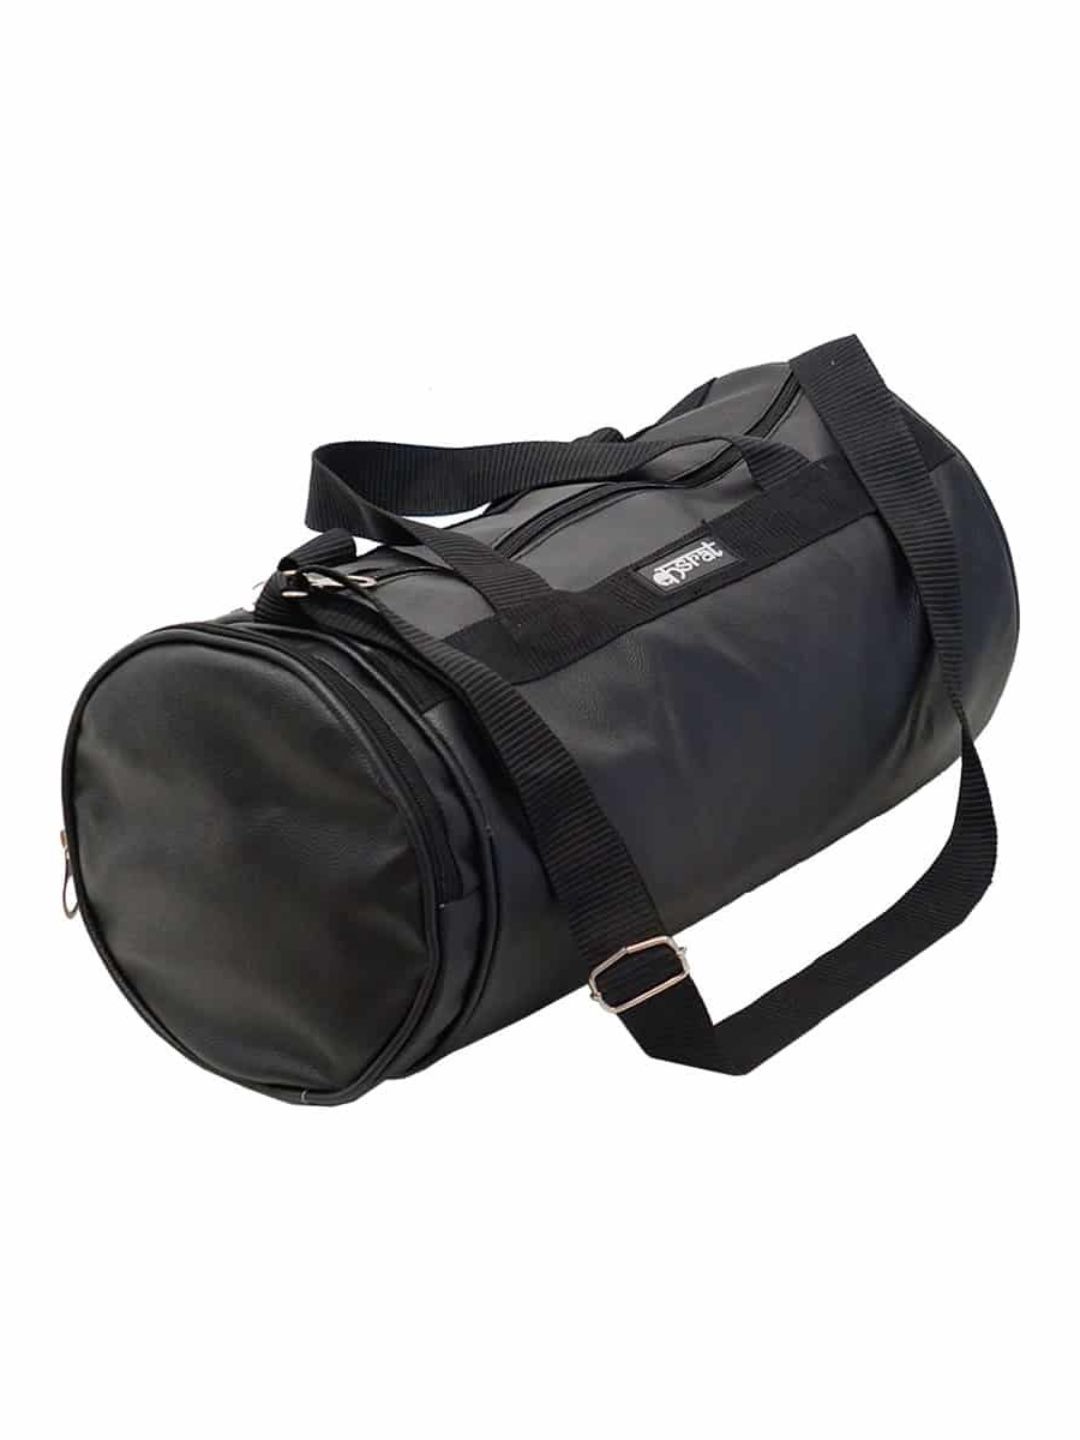 Kasrat Gym/Sports Bag (Black)